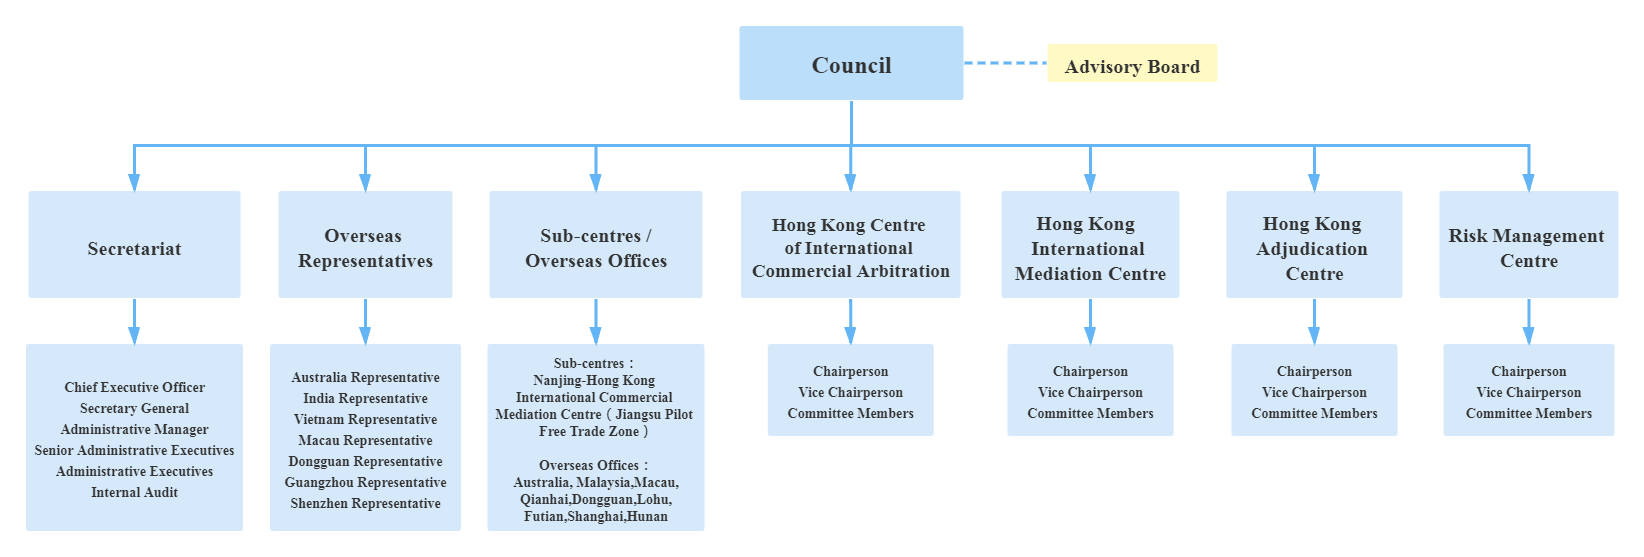 RMI Organization Chart